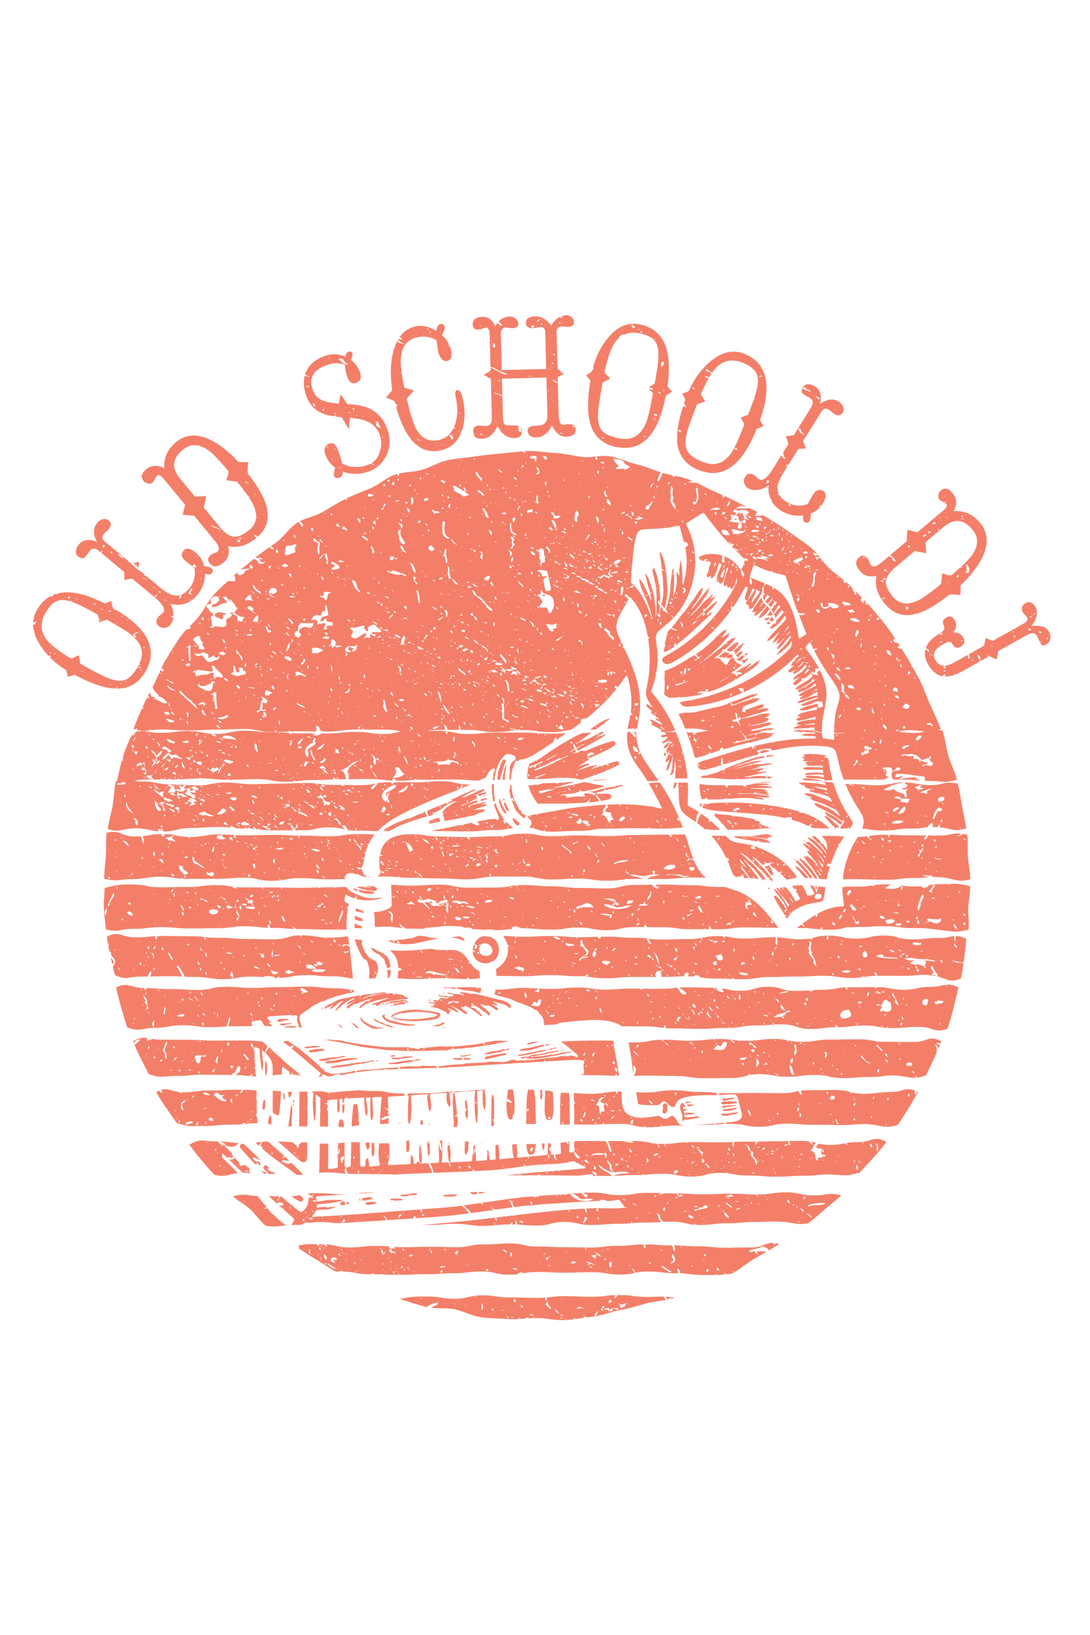 Old School Dj Printed T-Shirt For Men - WowWaves - 1